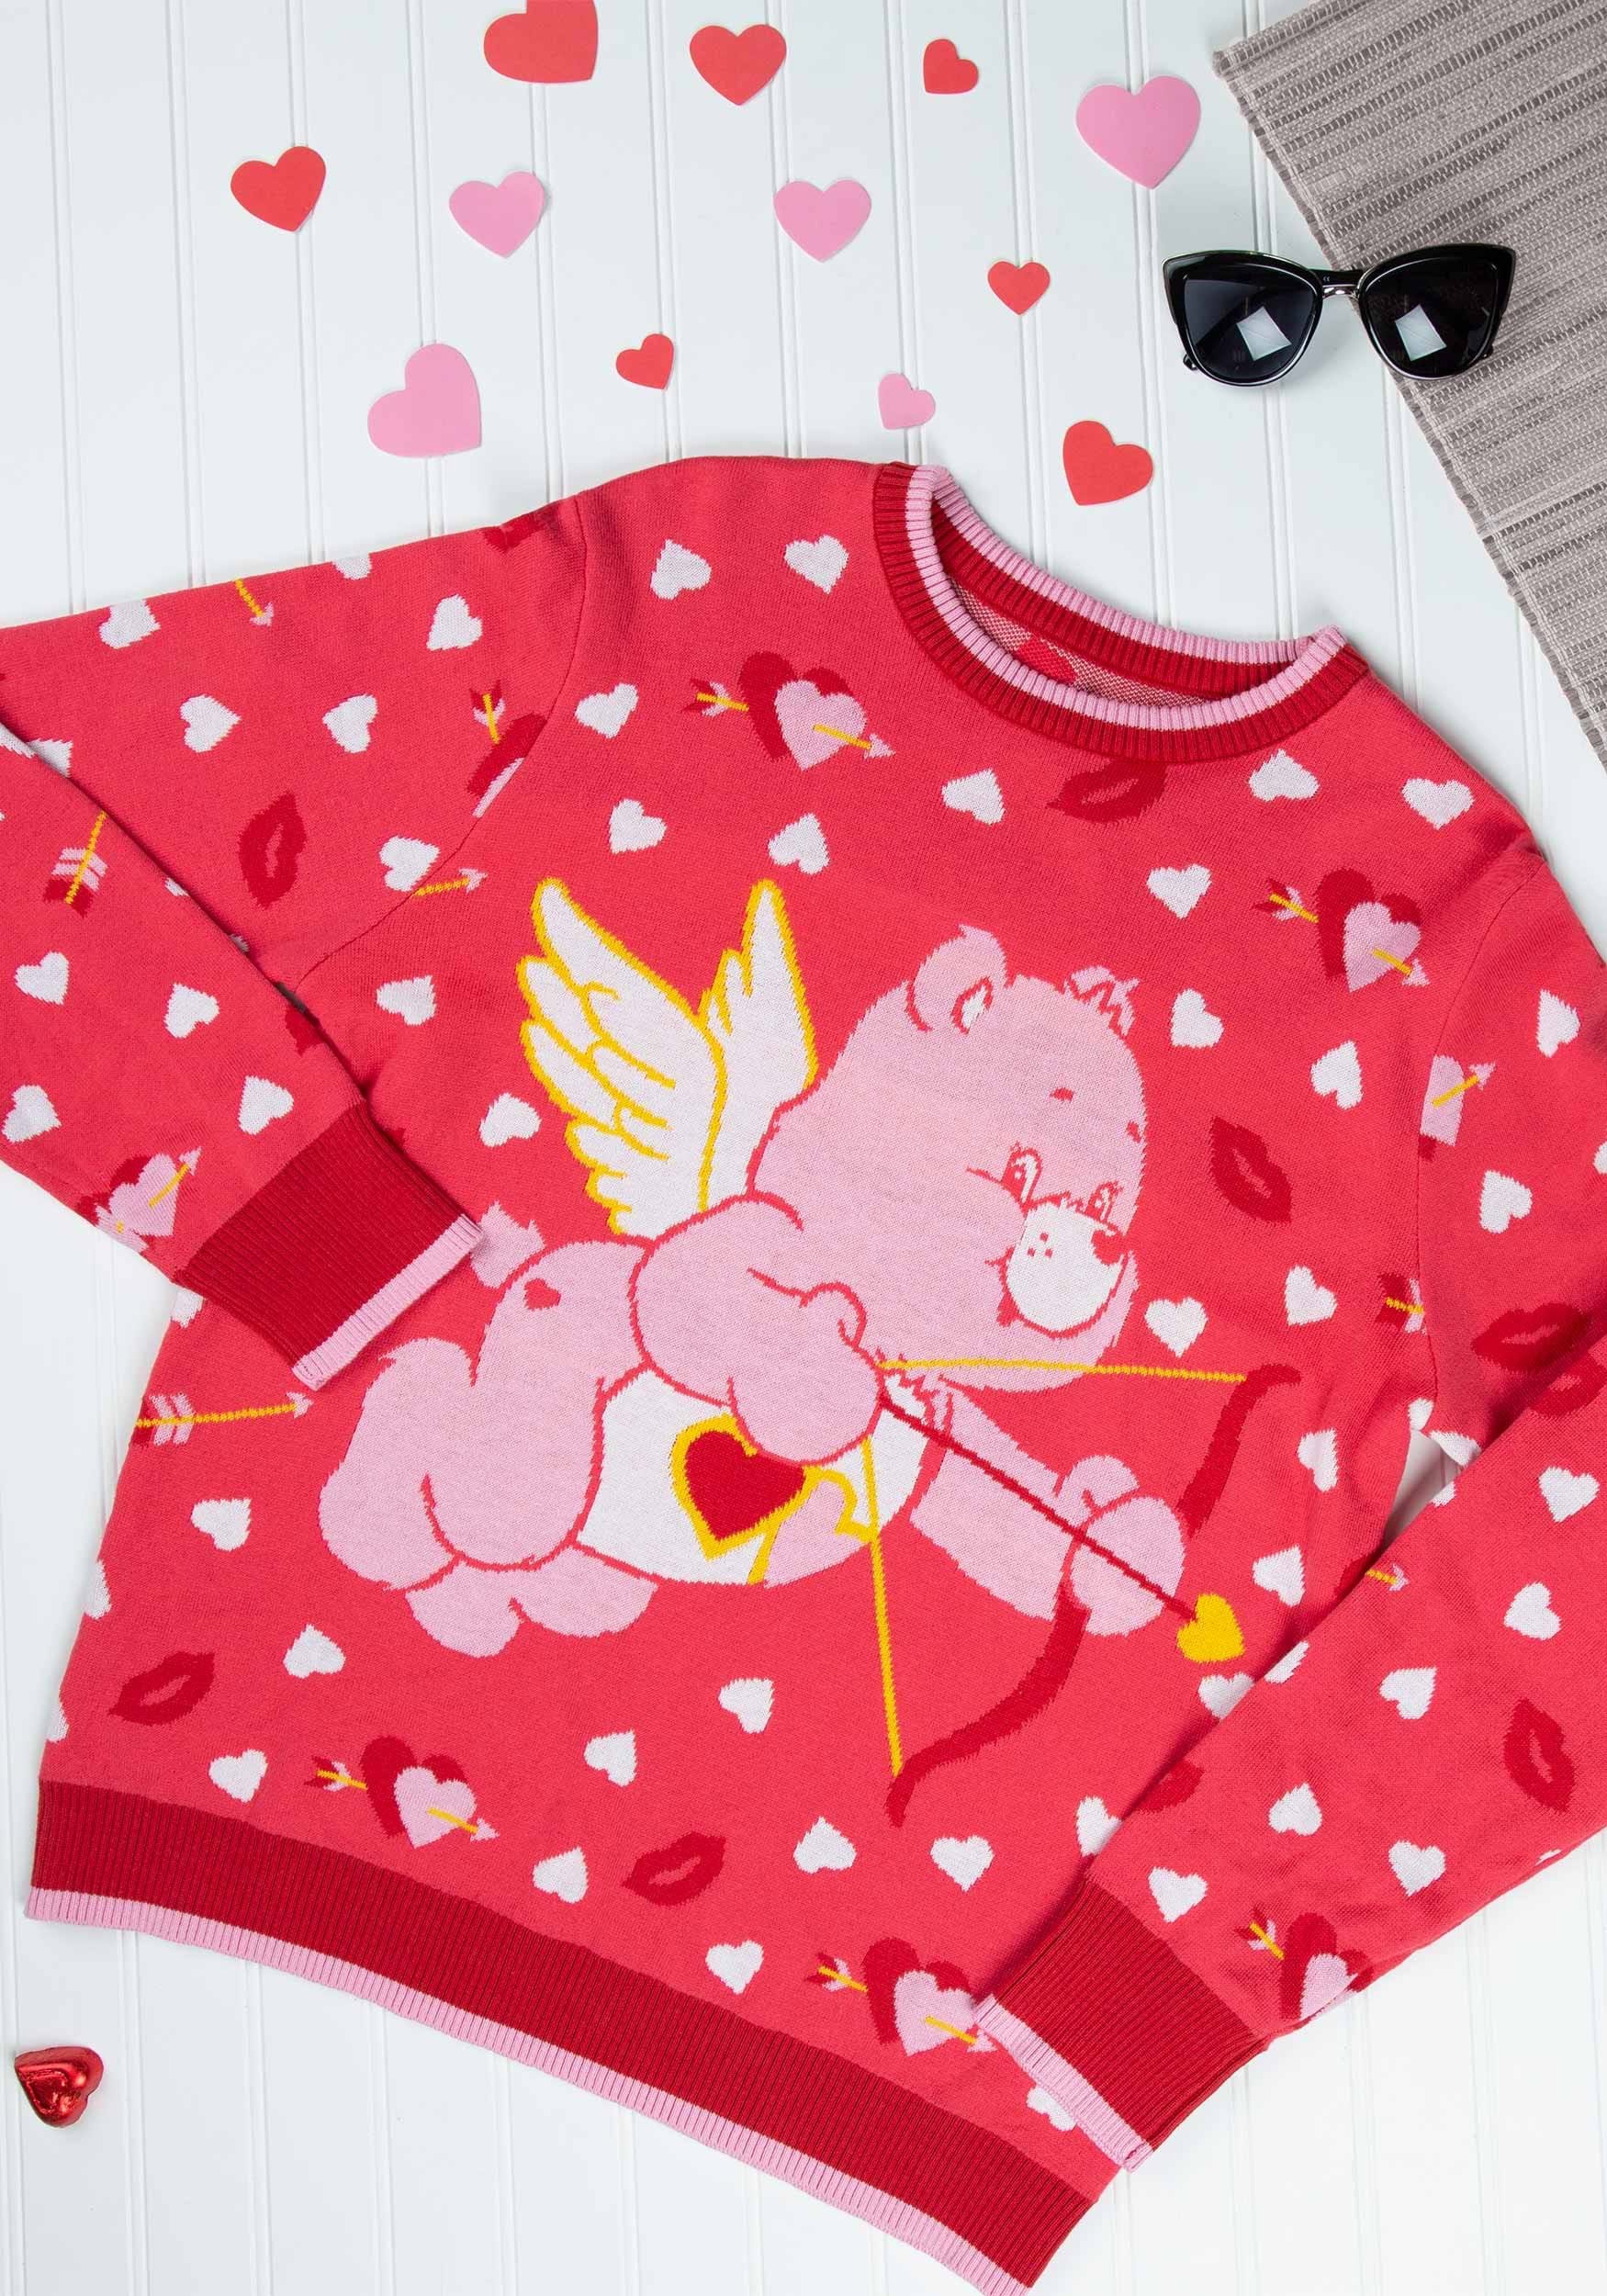 Love A Lot Bear Adult Valentine's Sweater